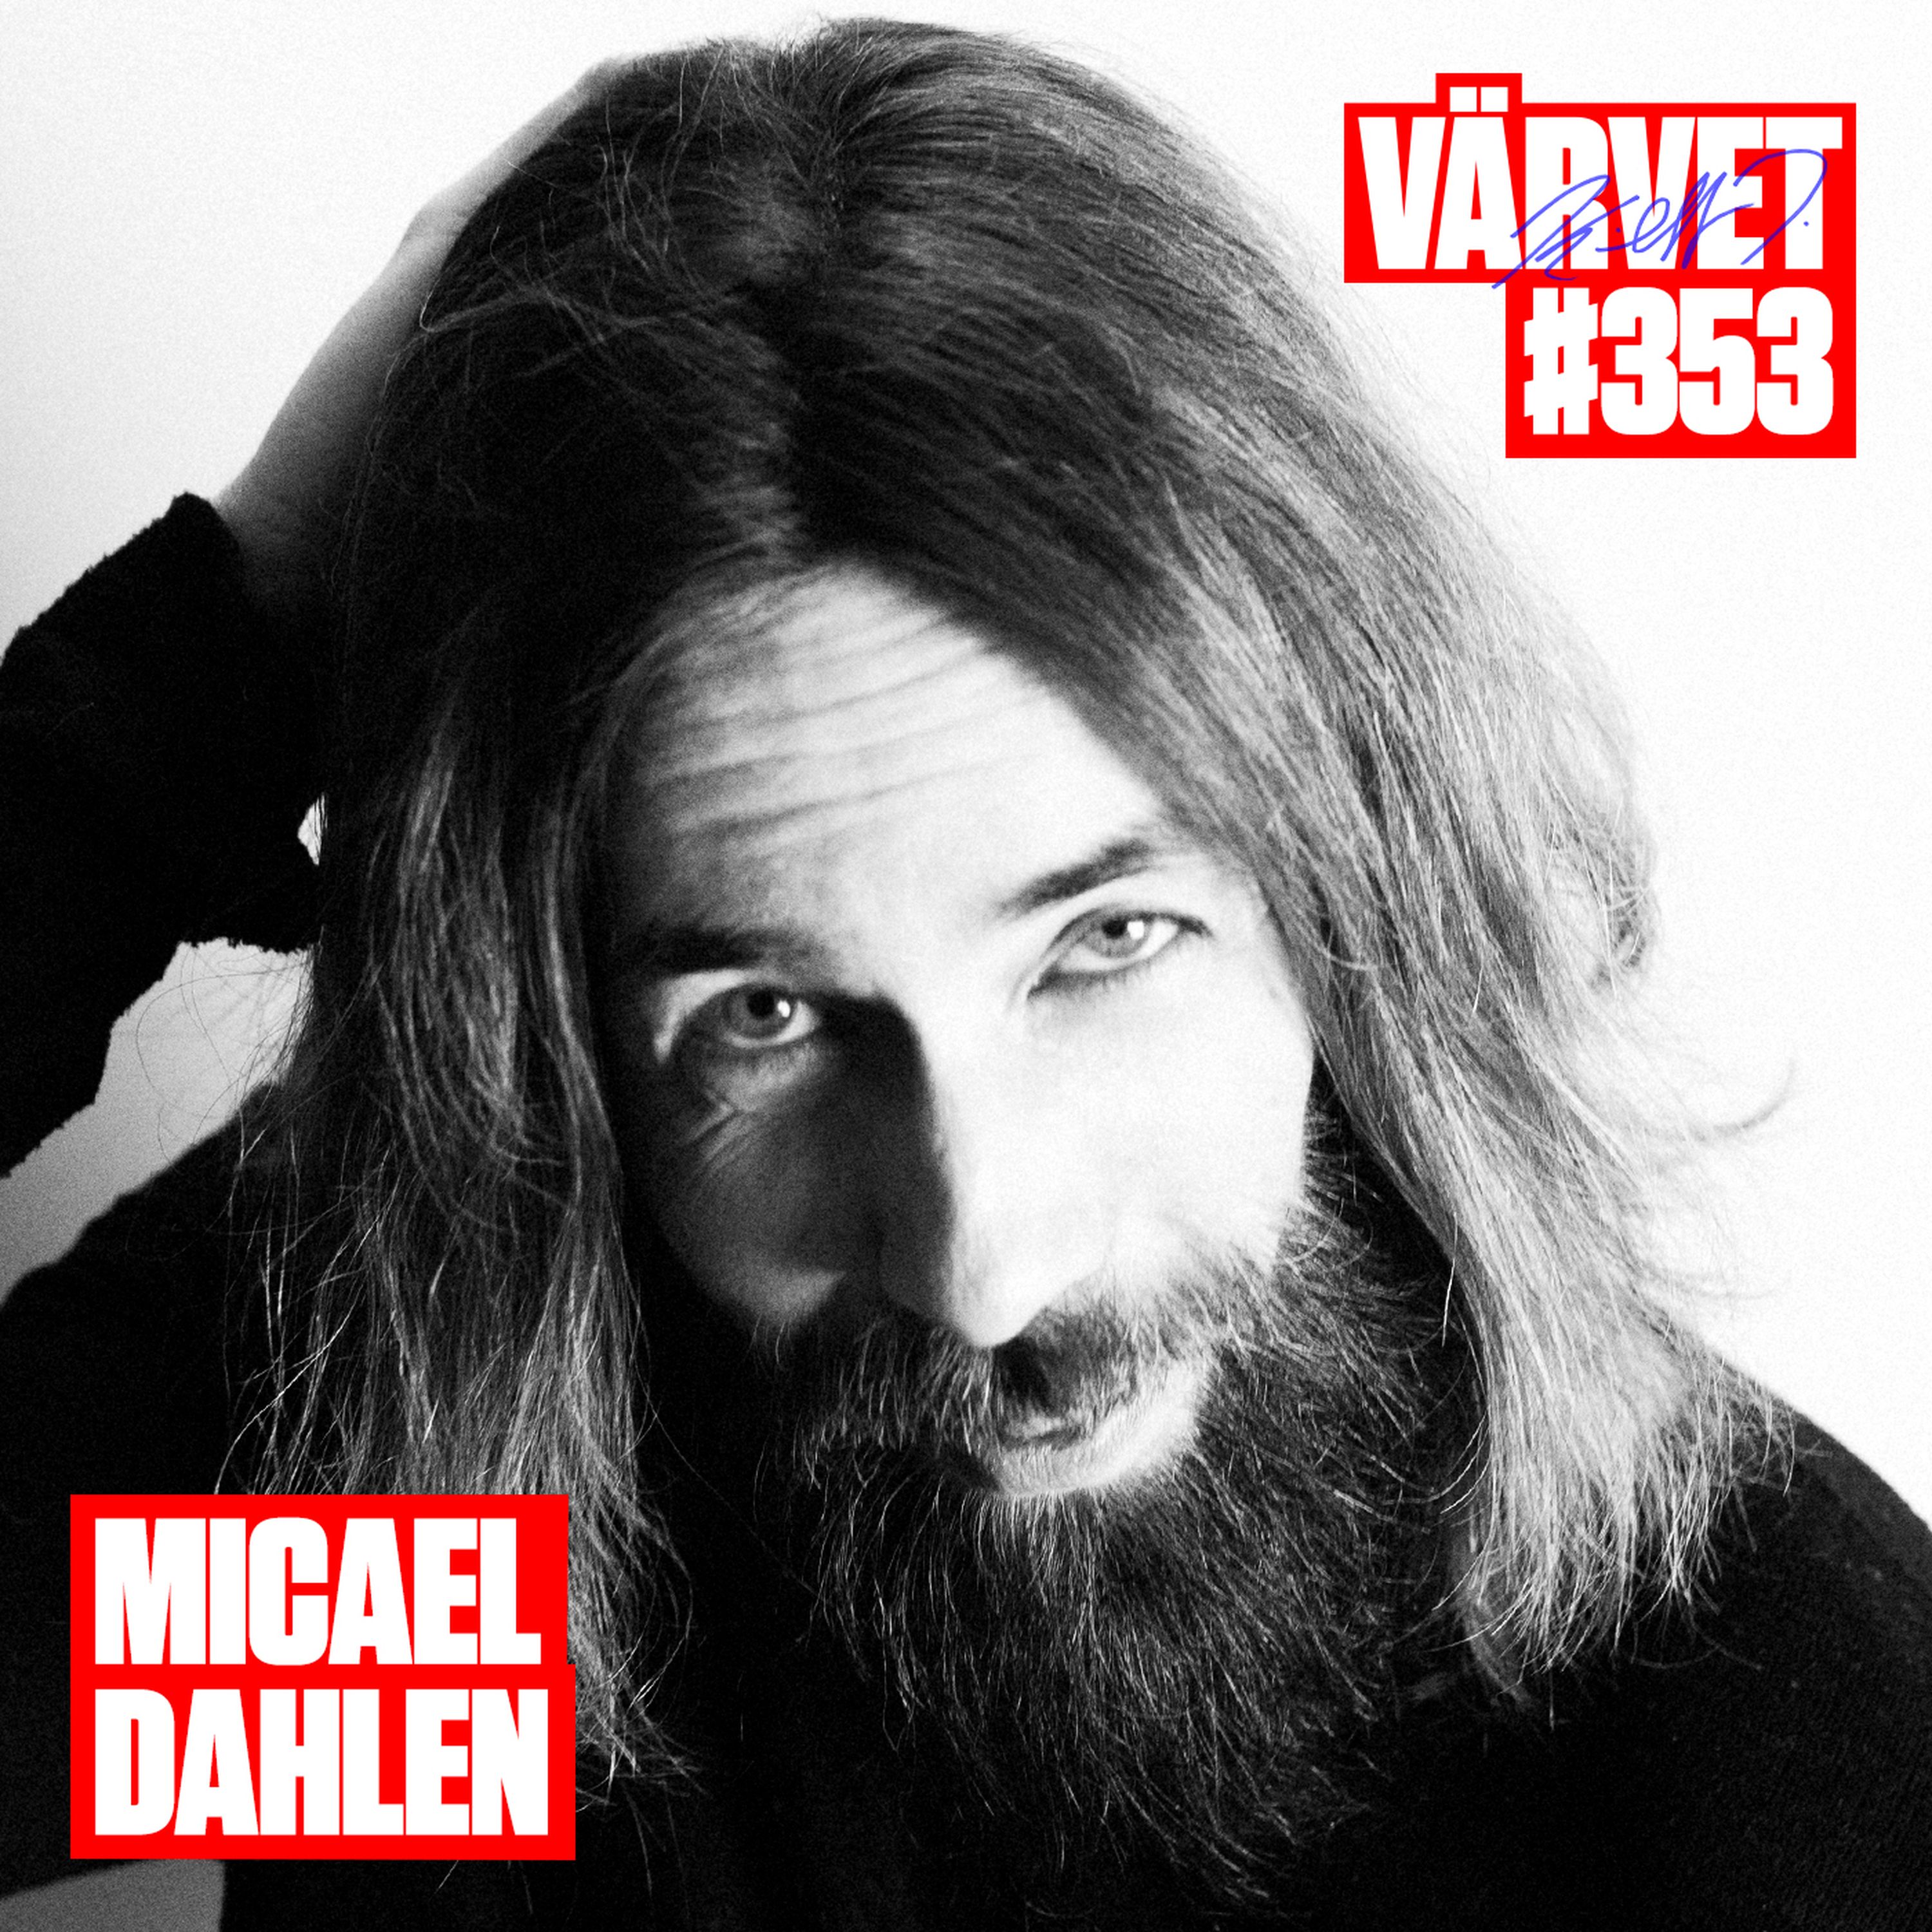 KORT VERSION - #353: Micael Dahlen